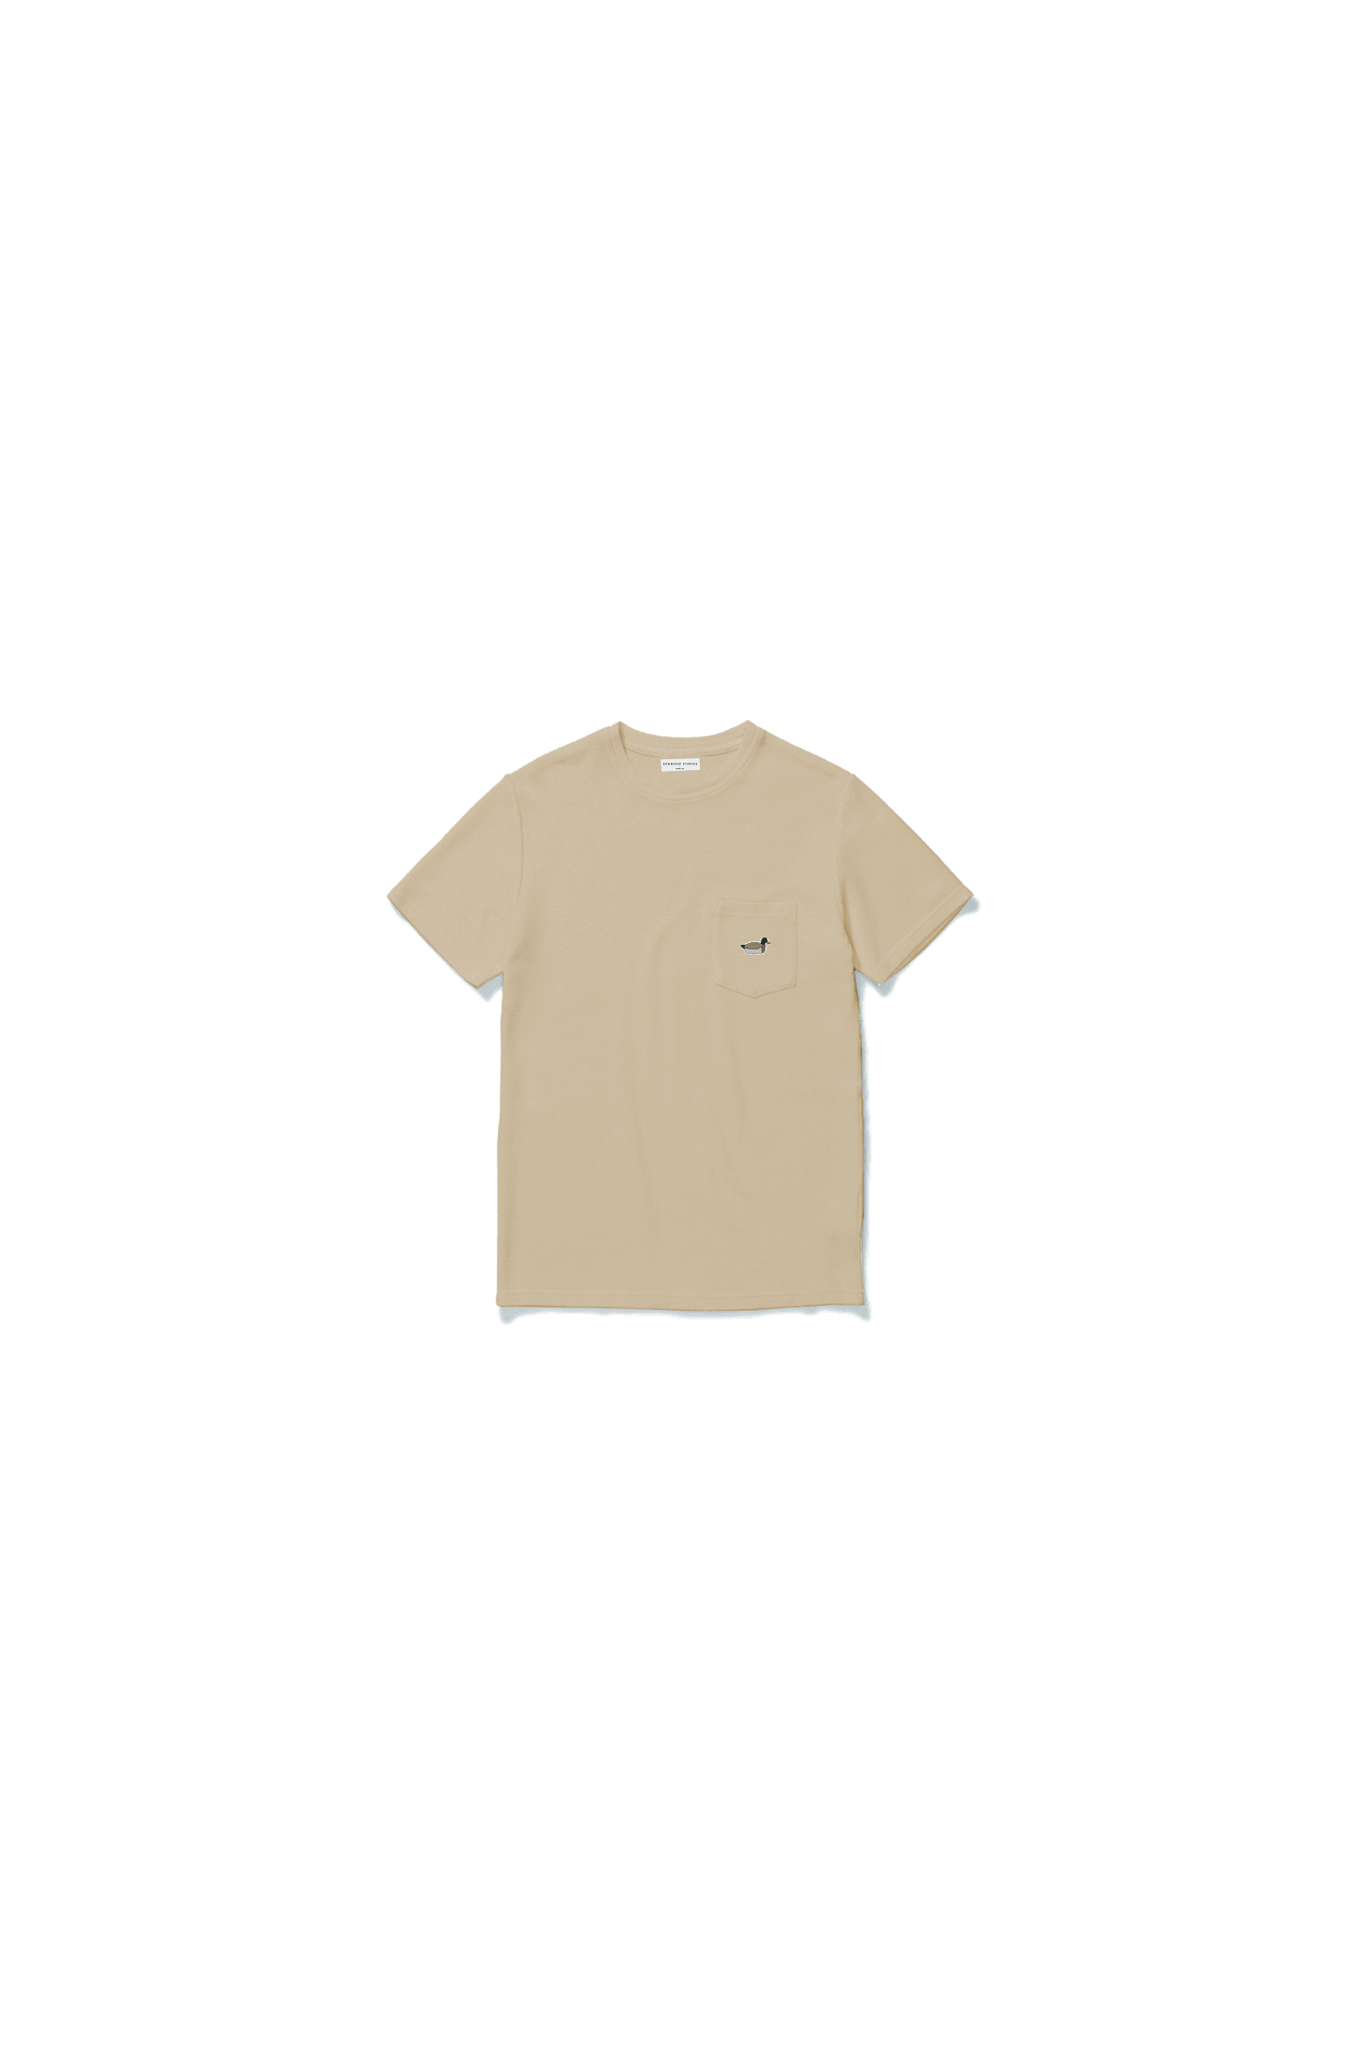 Camiseta Duck Patch Plain Tan - ECRU